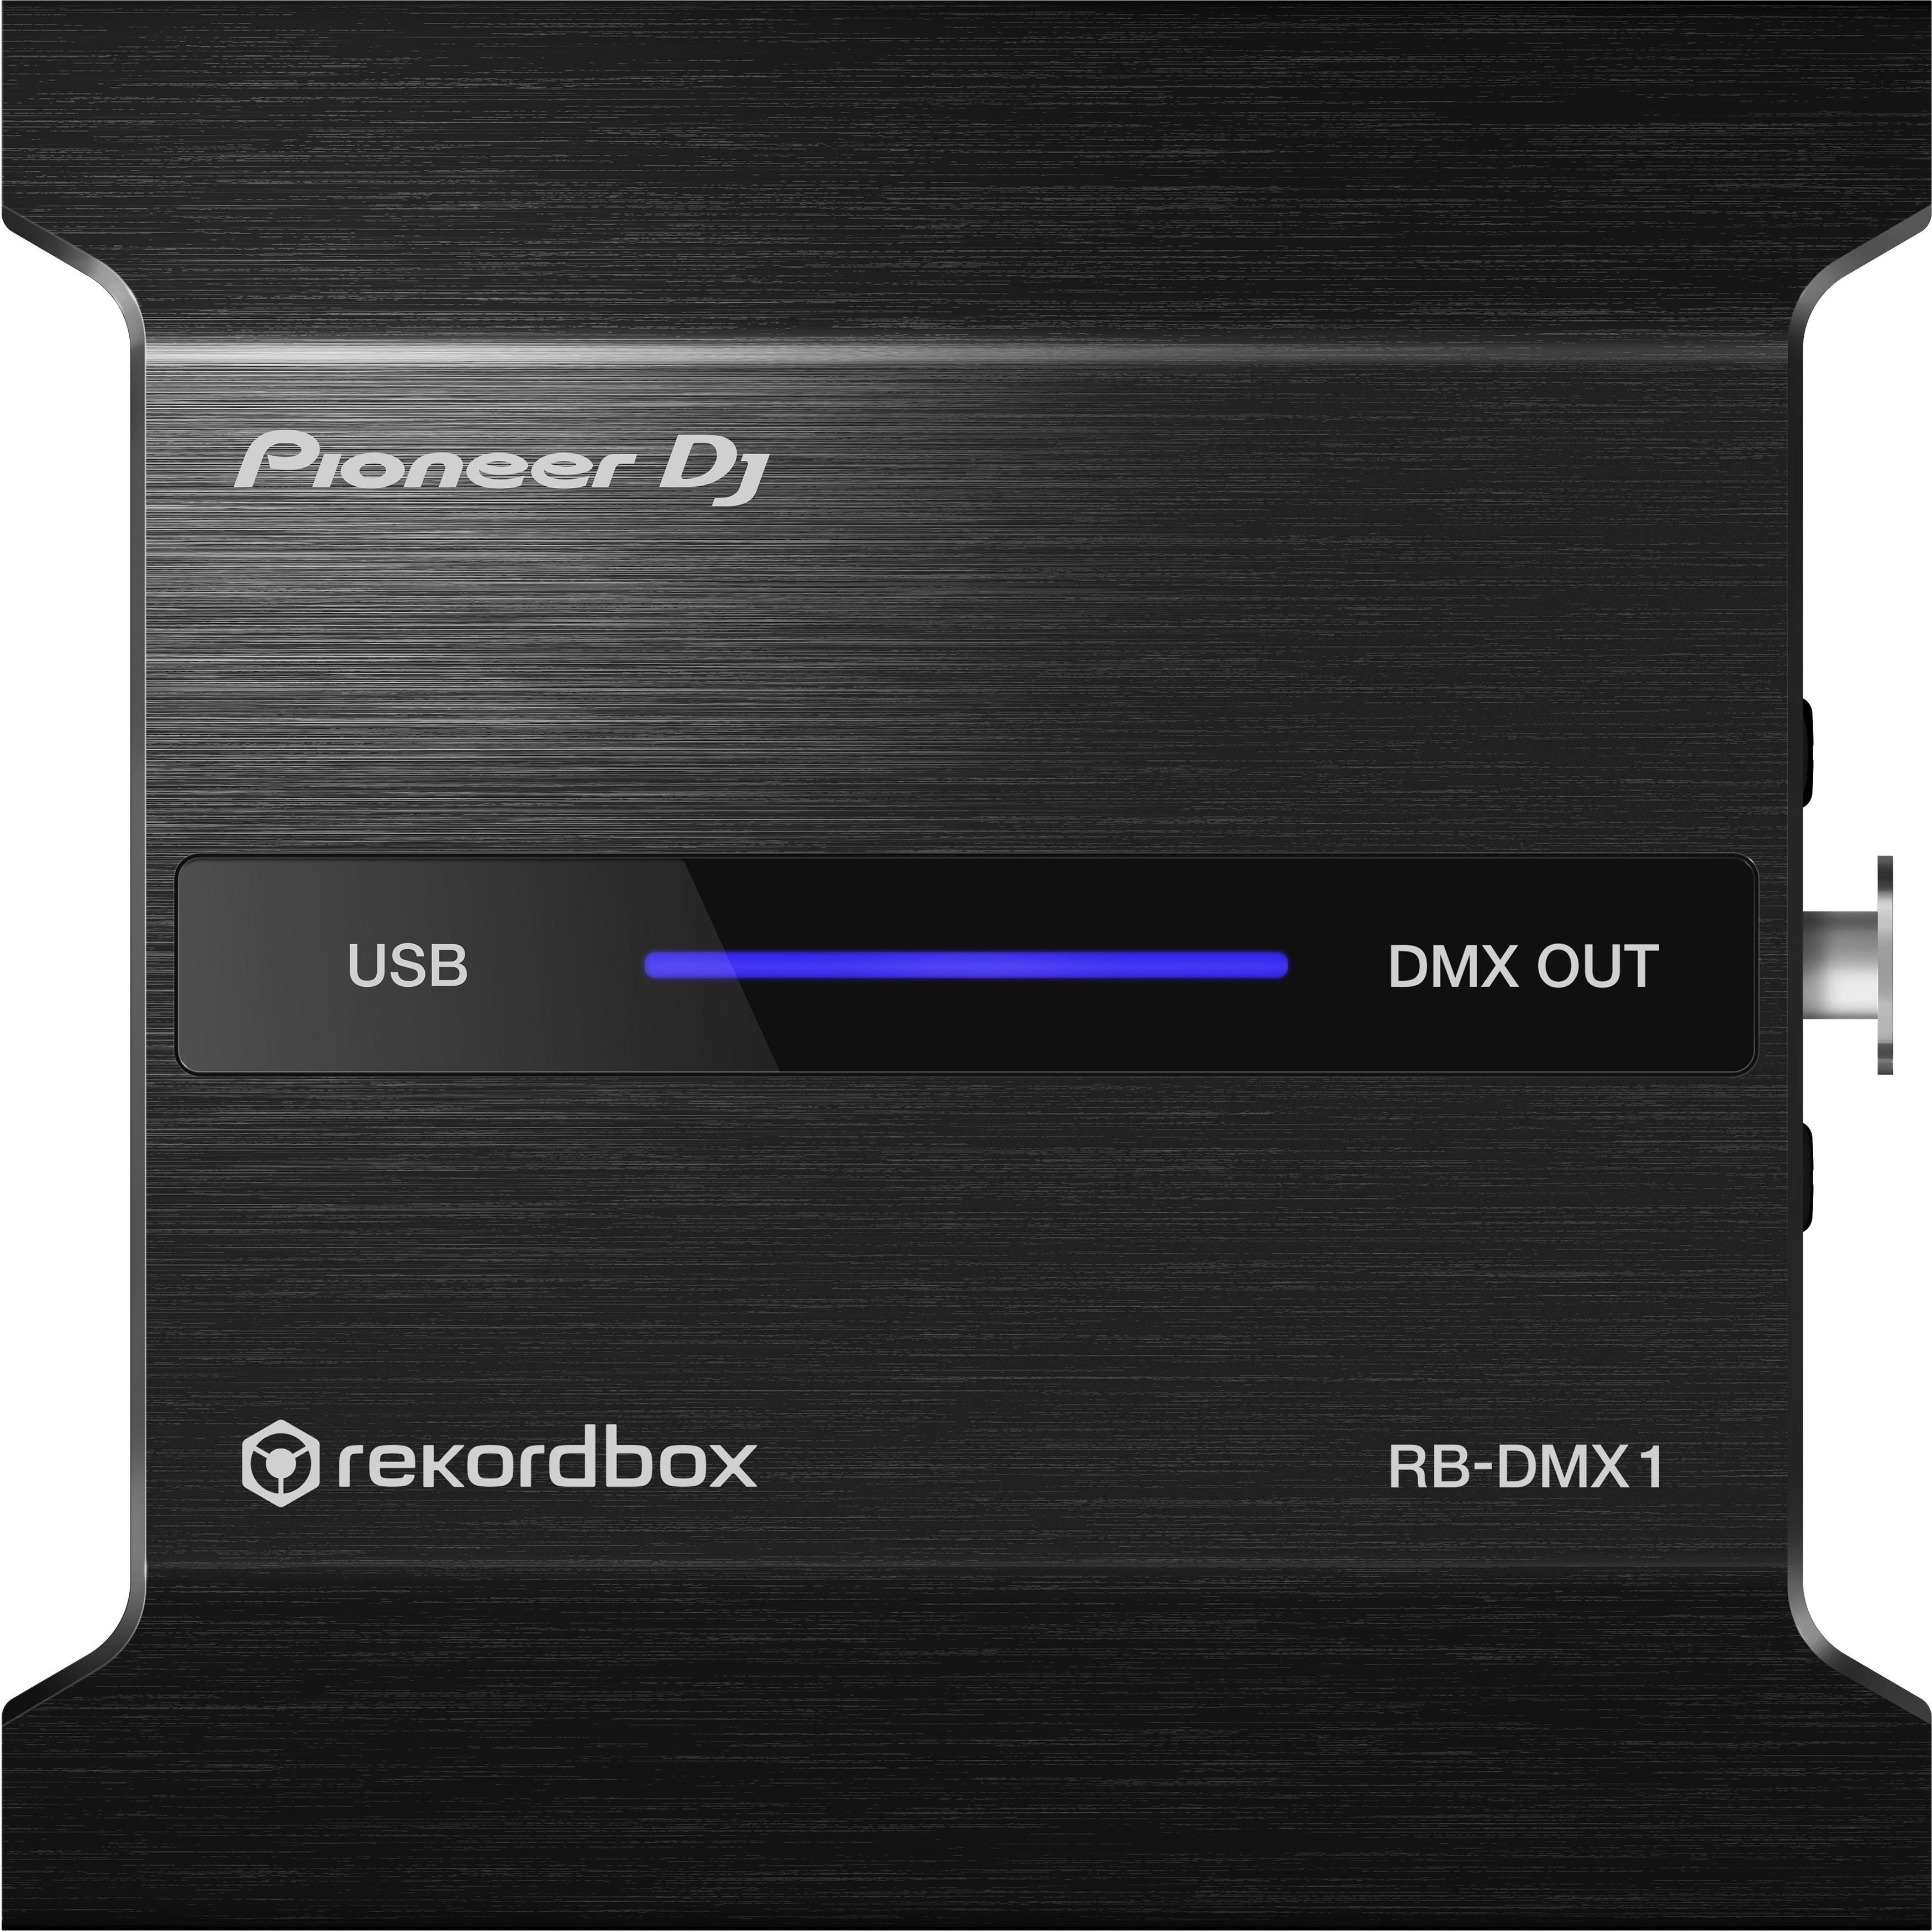 Pioneer Dj Rb-dmx1 - Controlador DMX - Variation 1